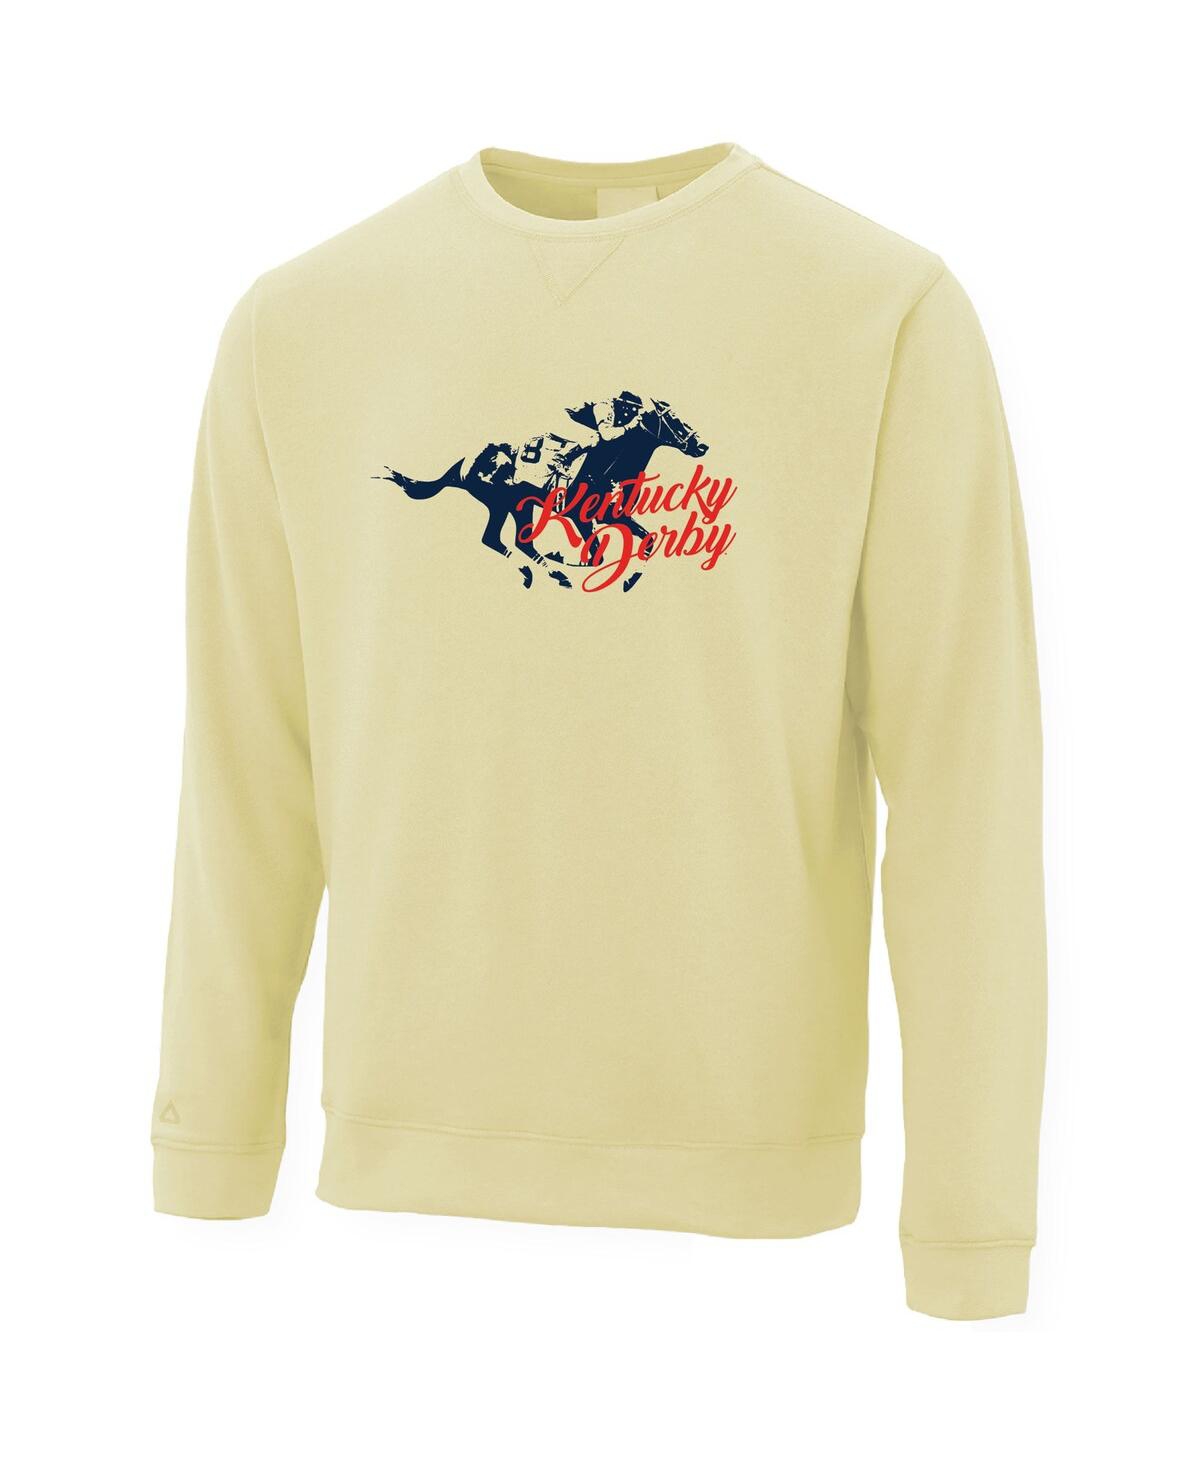 Shop Ahead Men's  Yellow Kentucky Derby 150 Sandlake Pullover Sweatshirt